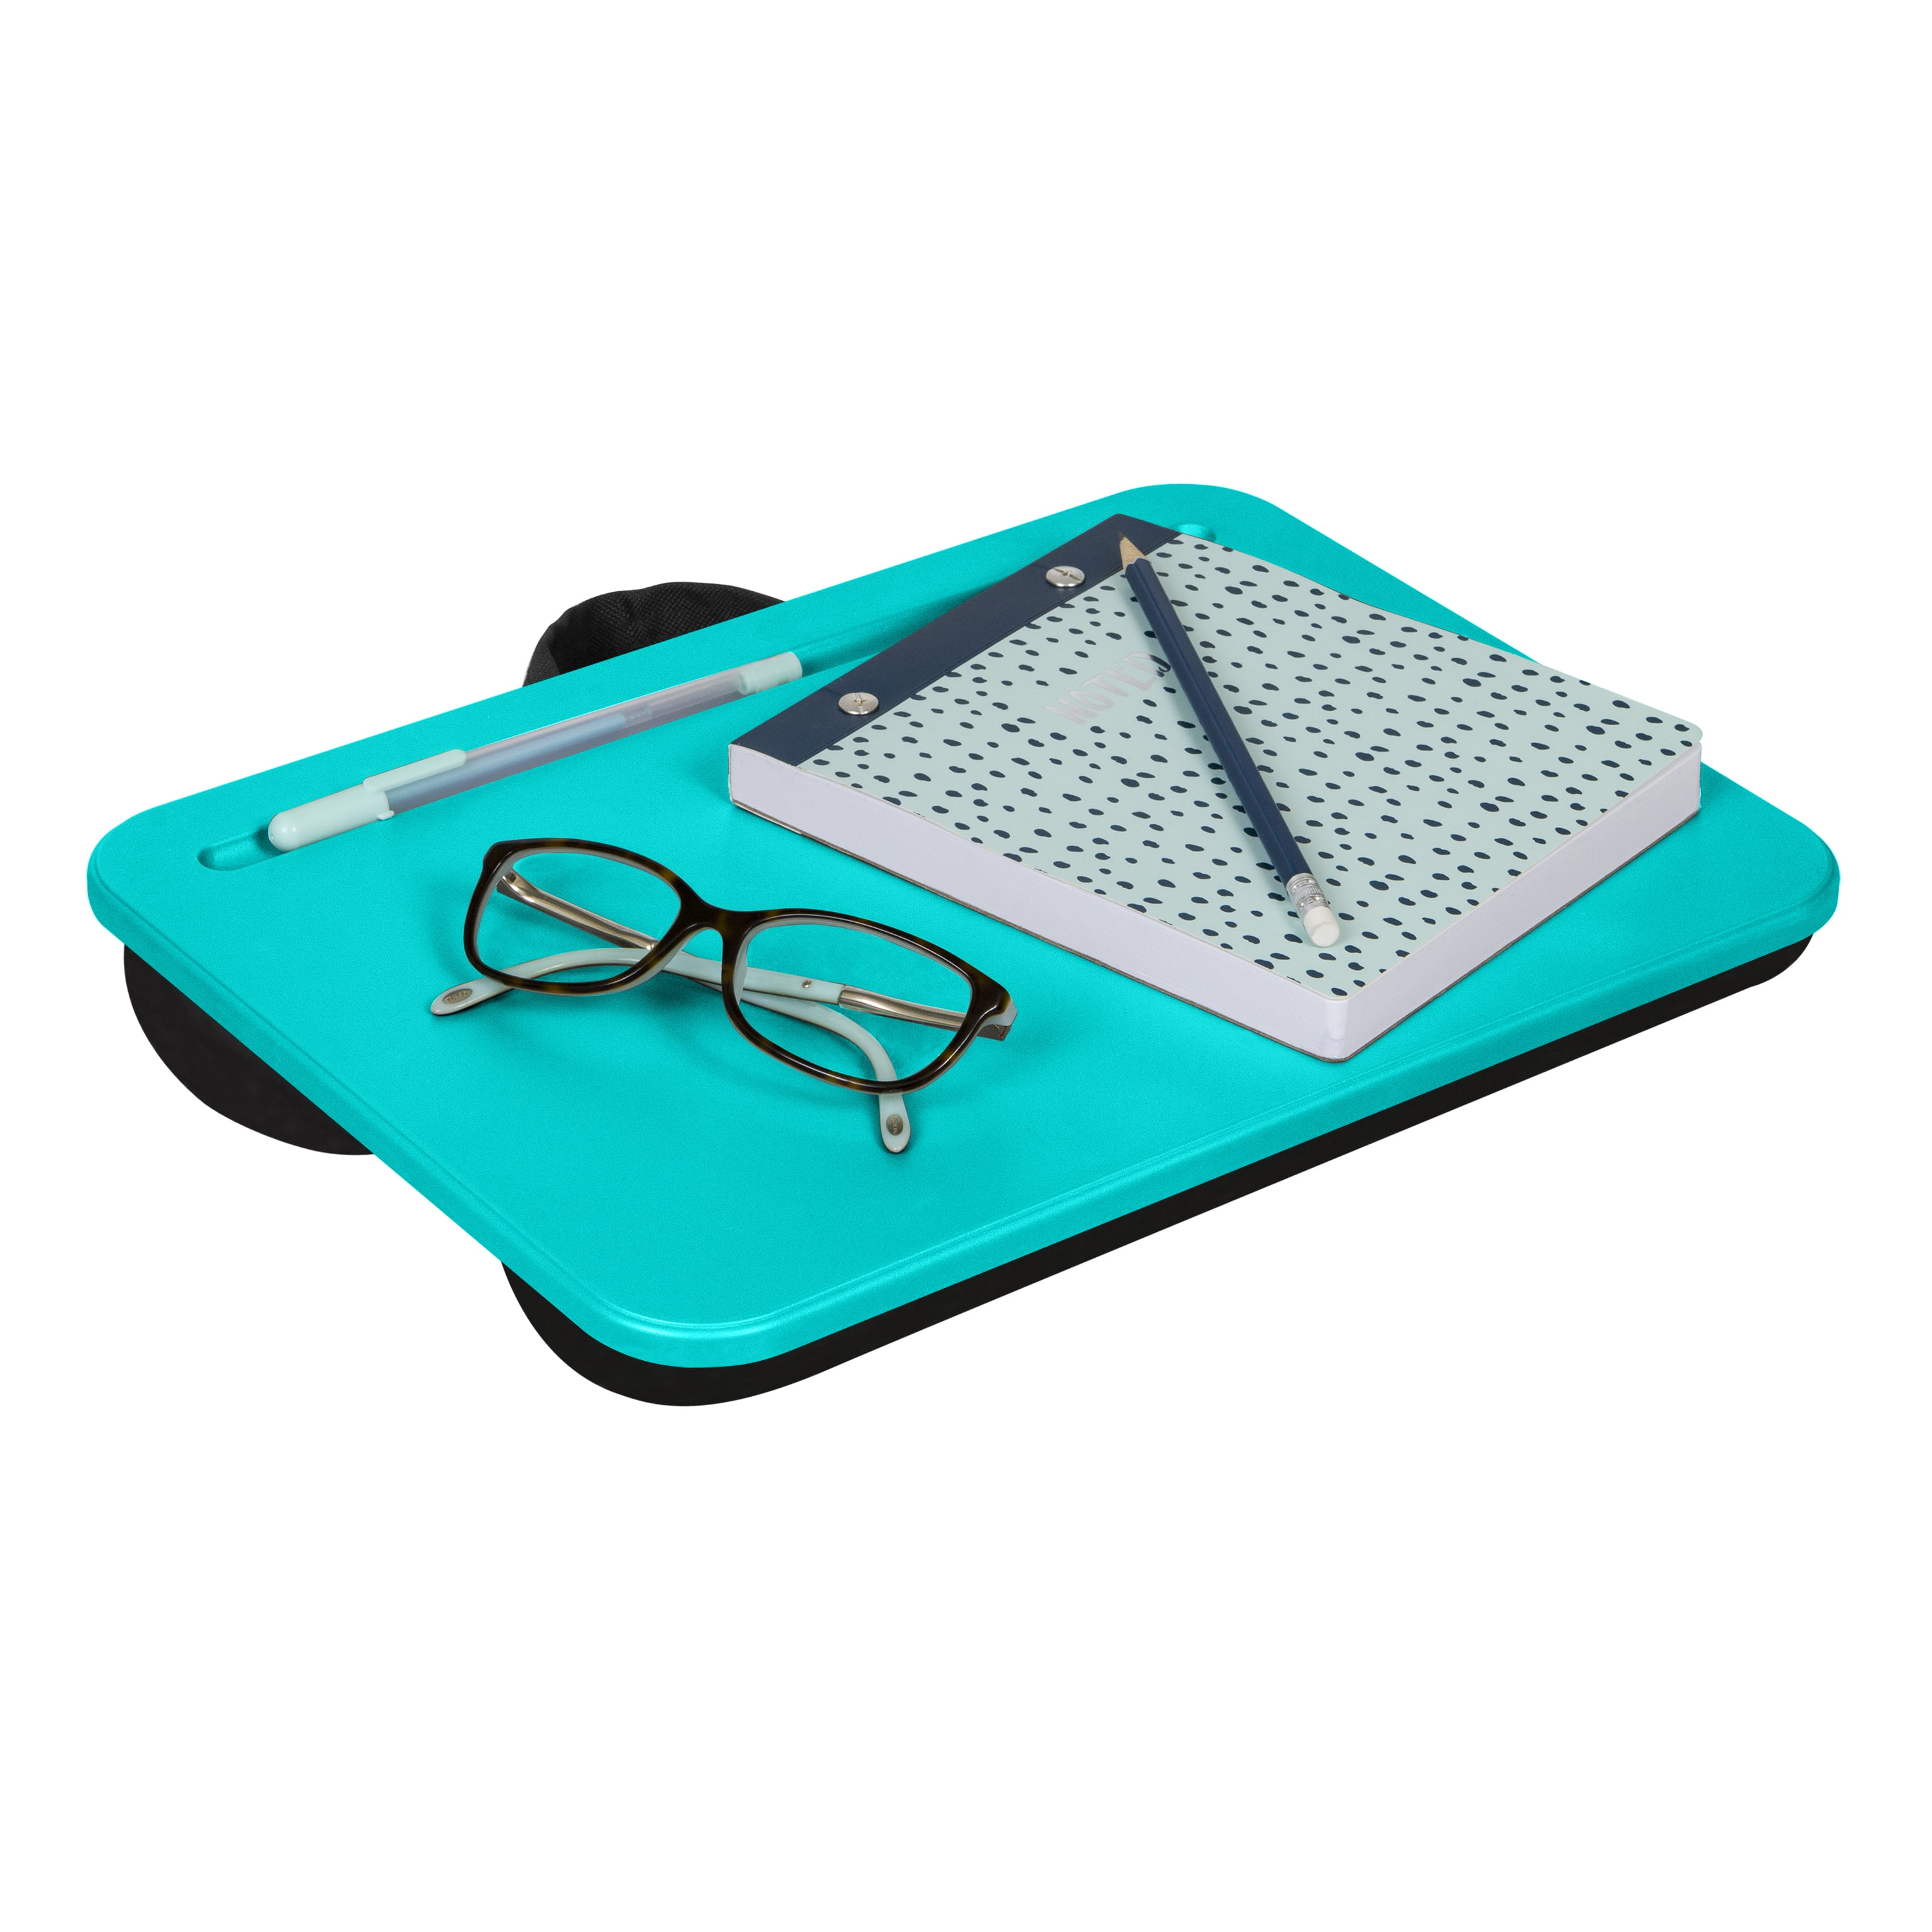 LapGear Compact Lap Desk 43119 Fits Up to 13 Laptop Turquoise 